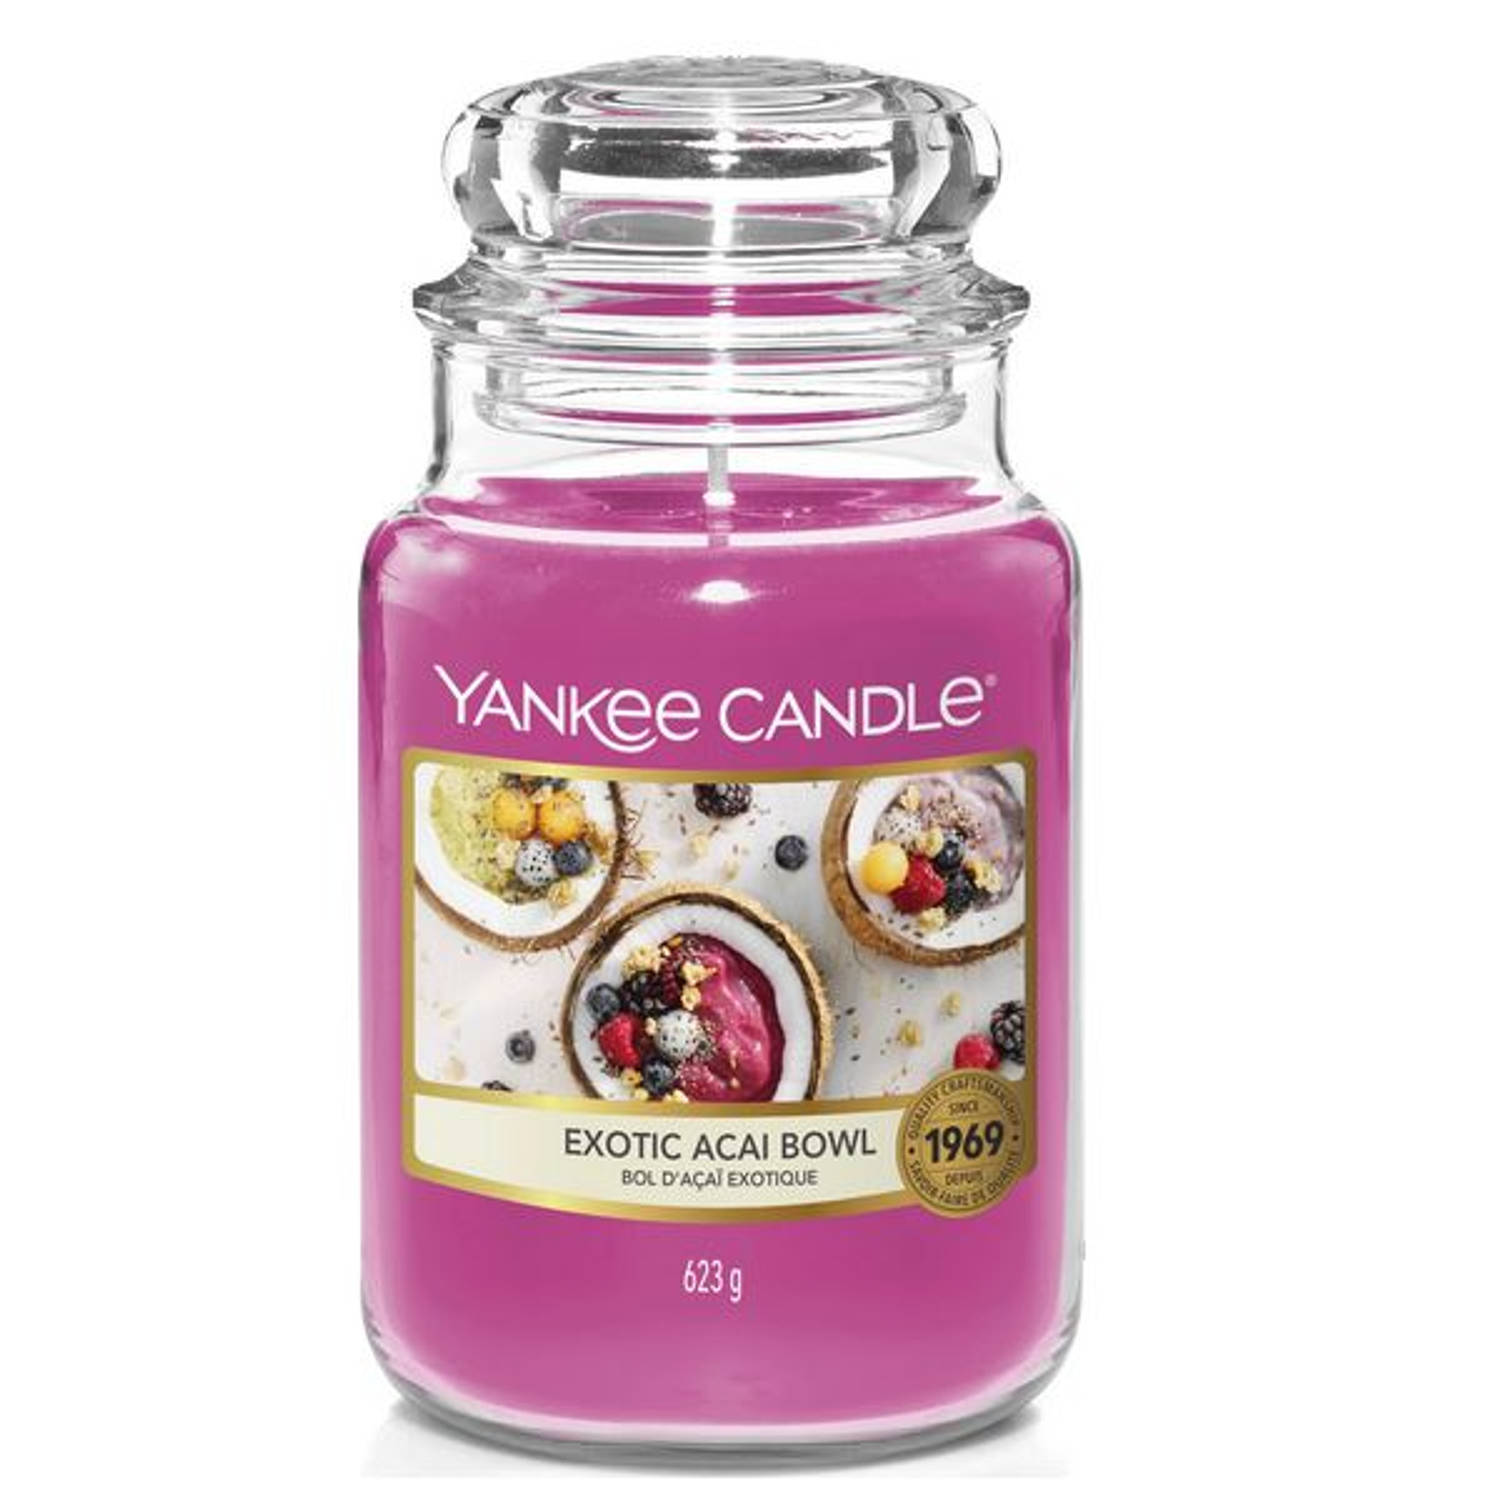 Yankee Candle - Exotic Acai Bowl geurkaars - Large Jar - Tot 150 branduren